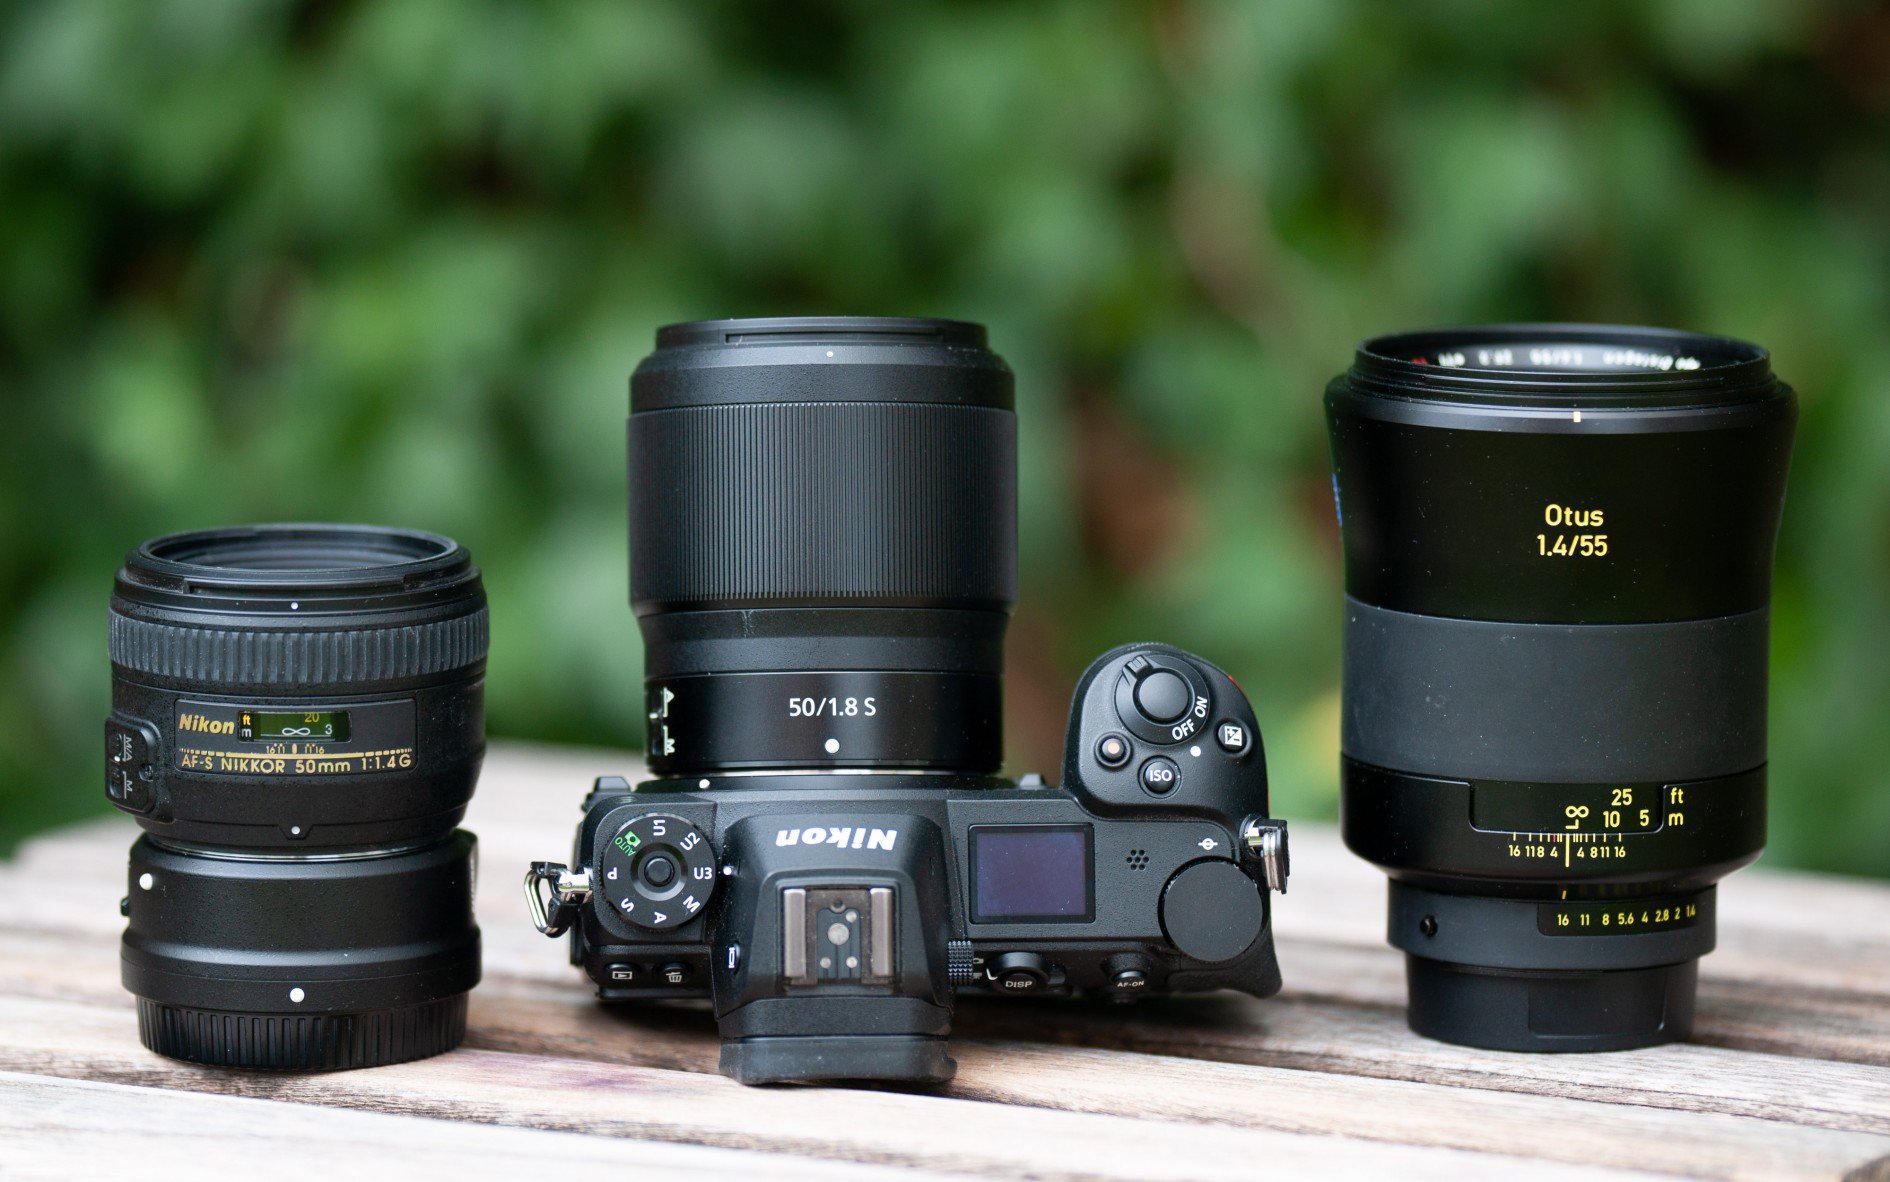 Nikon Z 50mm F 1 8 S Lens Now In Stock Reviewed At Cameralabs Nikon Rumors